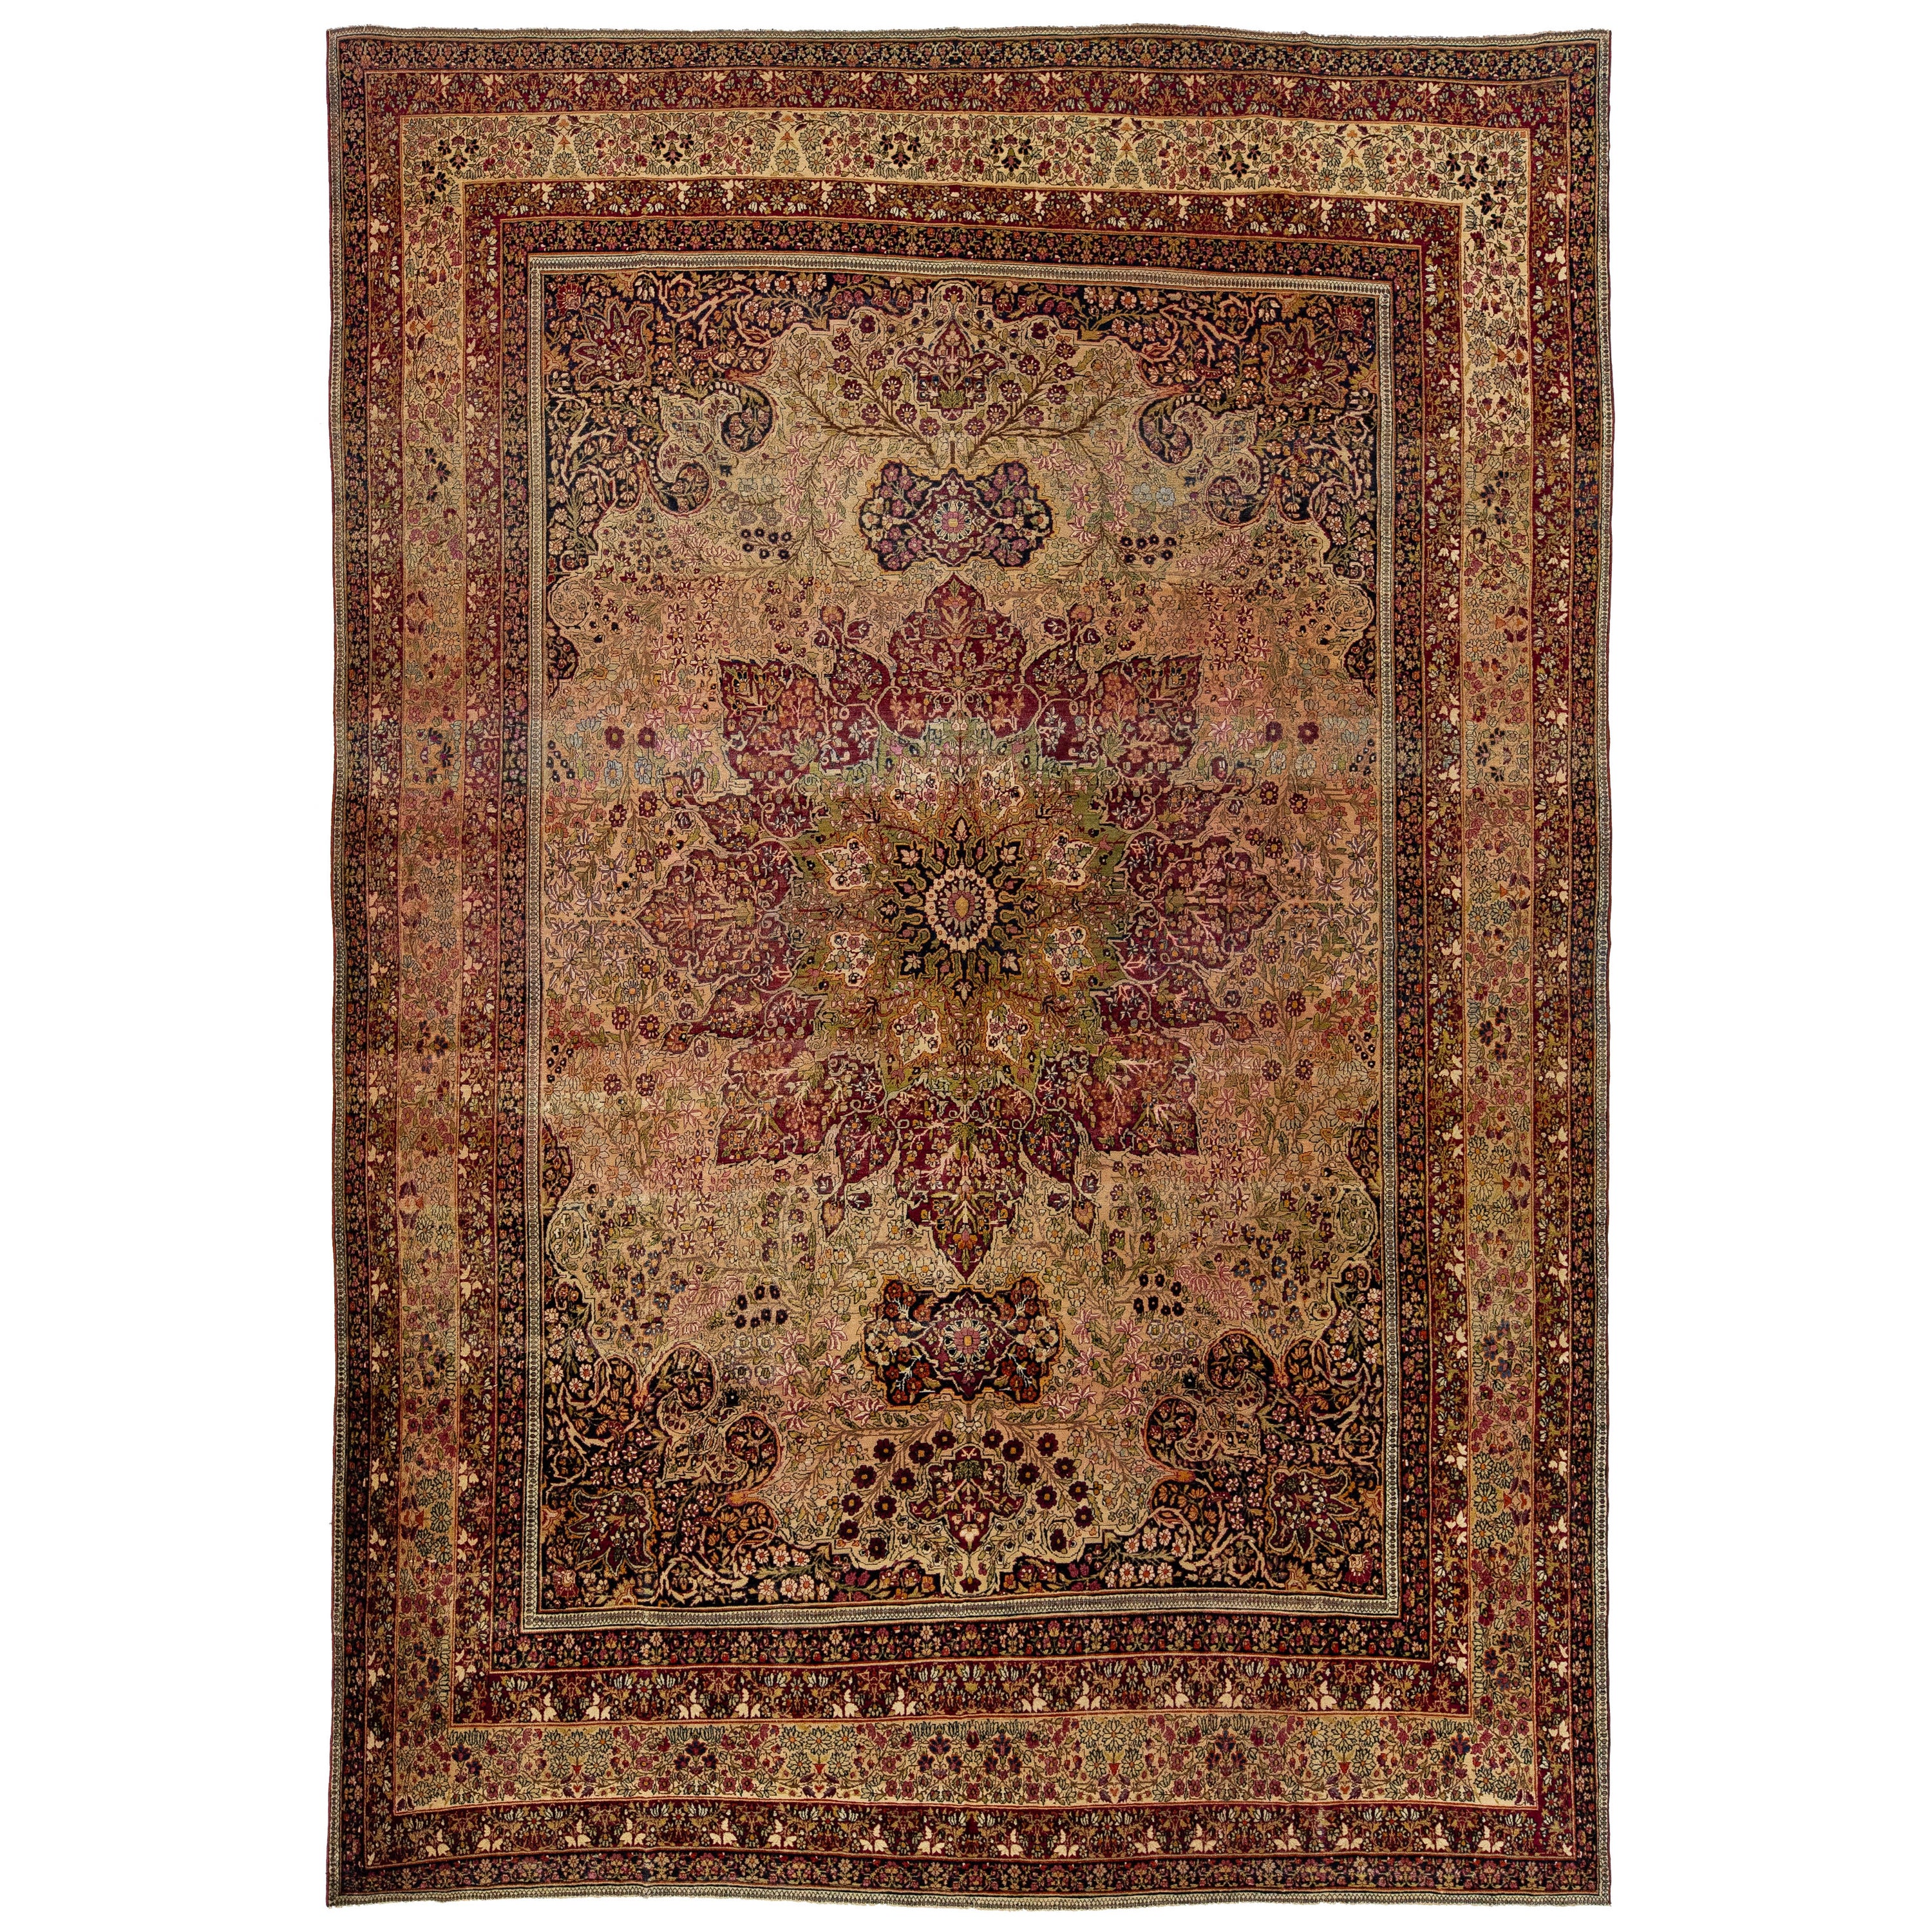 1880s Antique Persian Kerman Red Wool Rug Handmade Featuring a Rosette Motif 